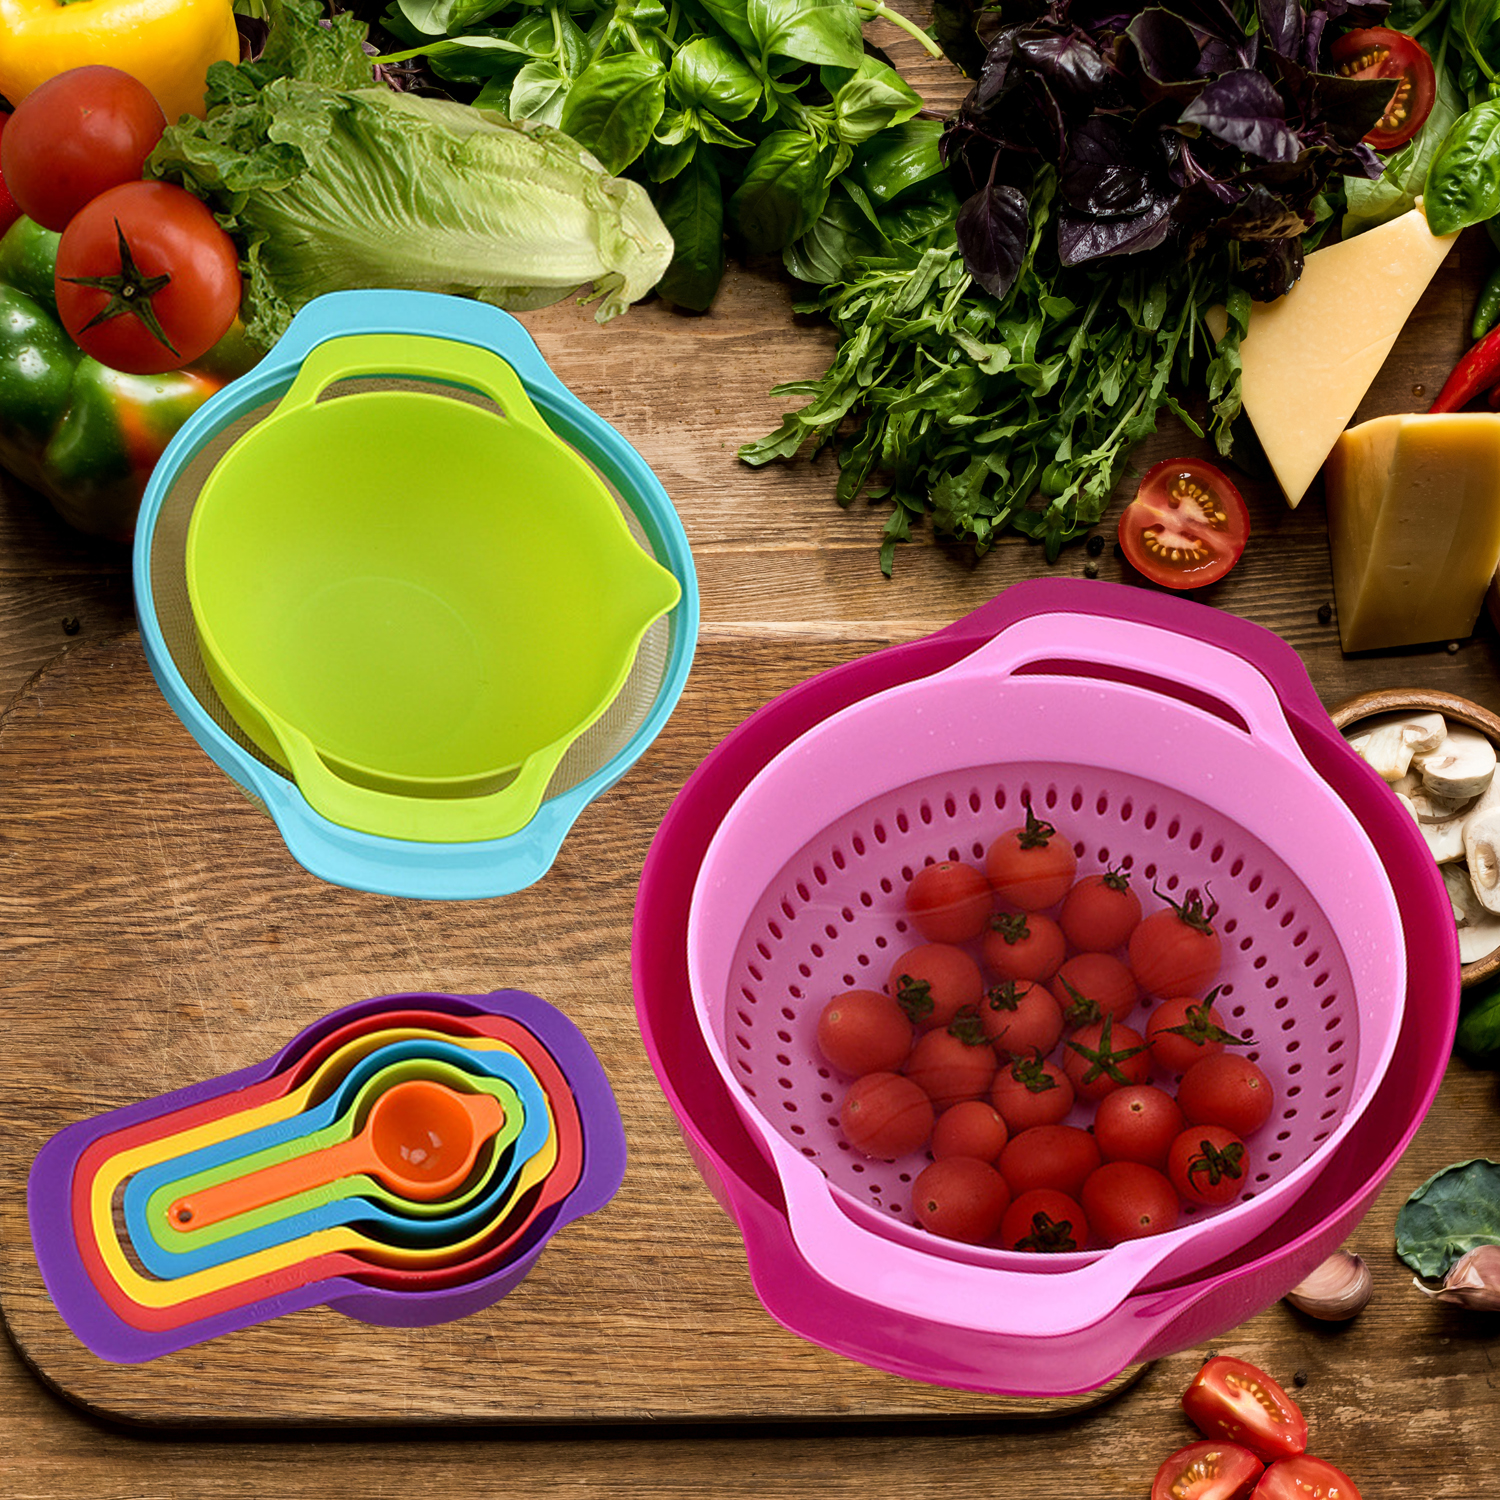 10 Piece Mixing Bowl Set Salad Bowls Colorful Kitchen Bowls Colander Mesh Strainer with Handles Measuring Cups